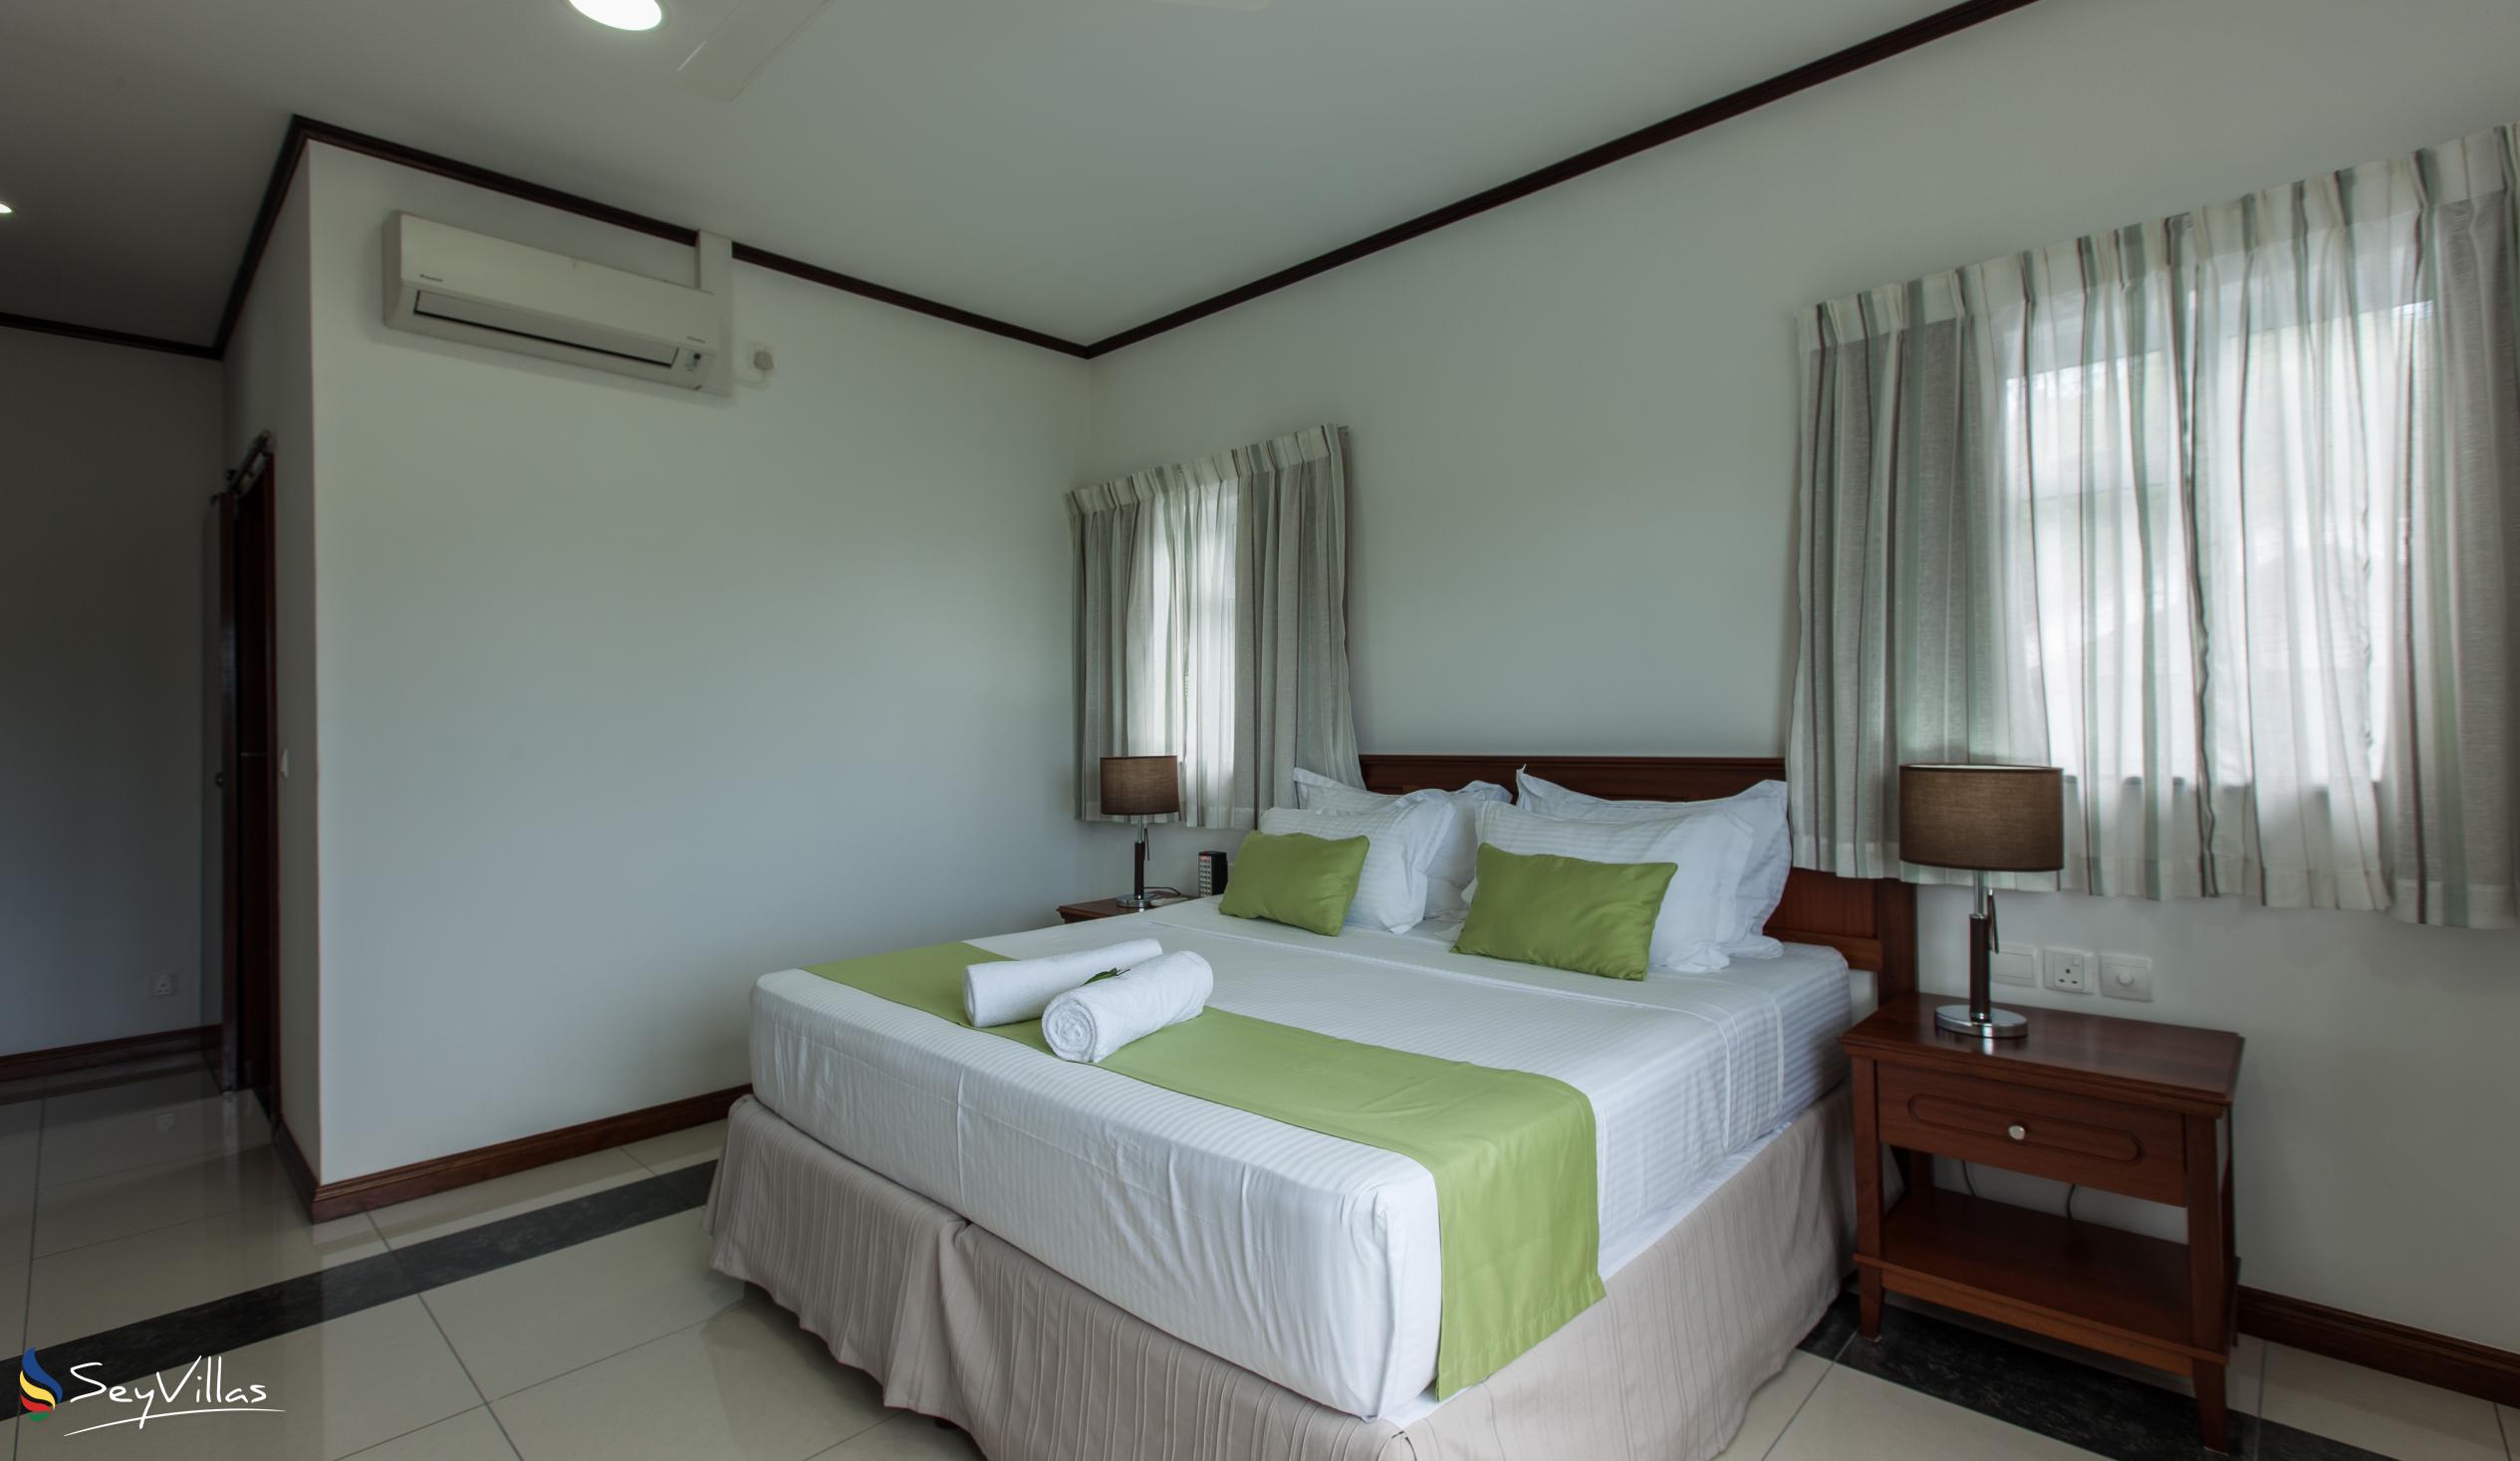 Photo 61: Bambous River Lodge - 2-Bedroom Apartment - Mahé (Seychelles)